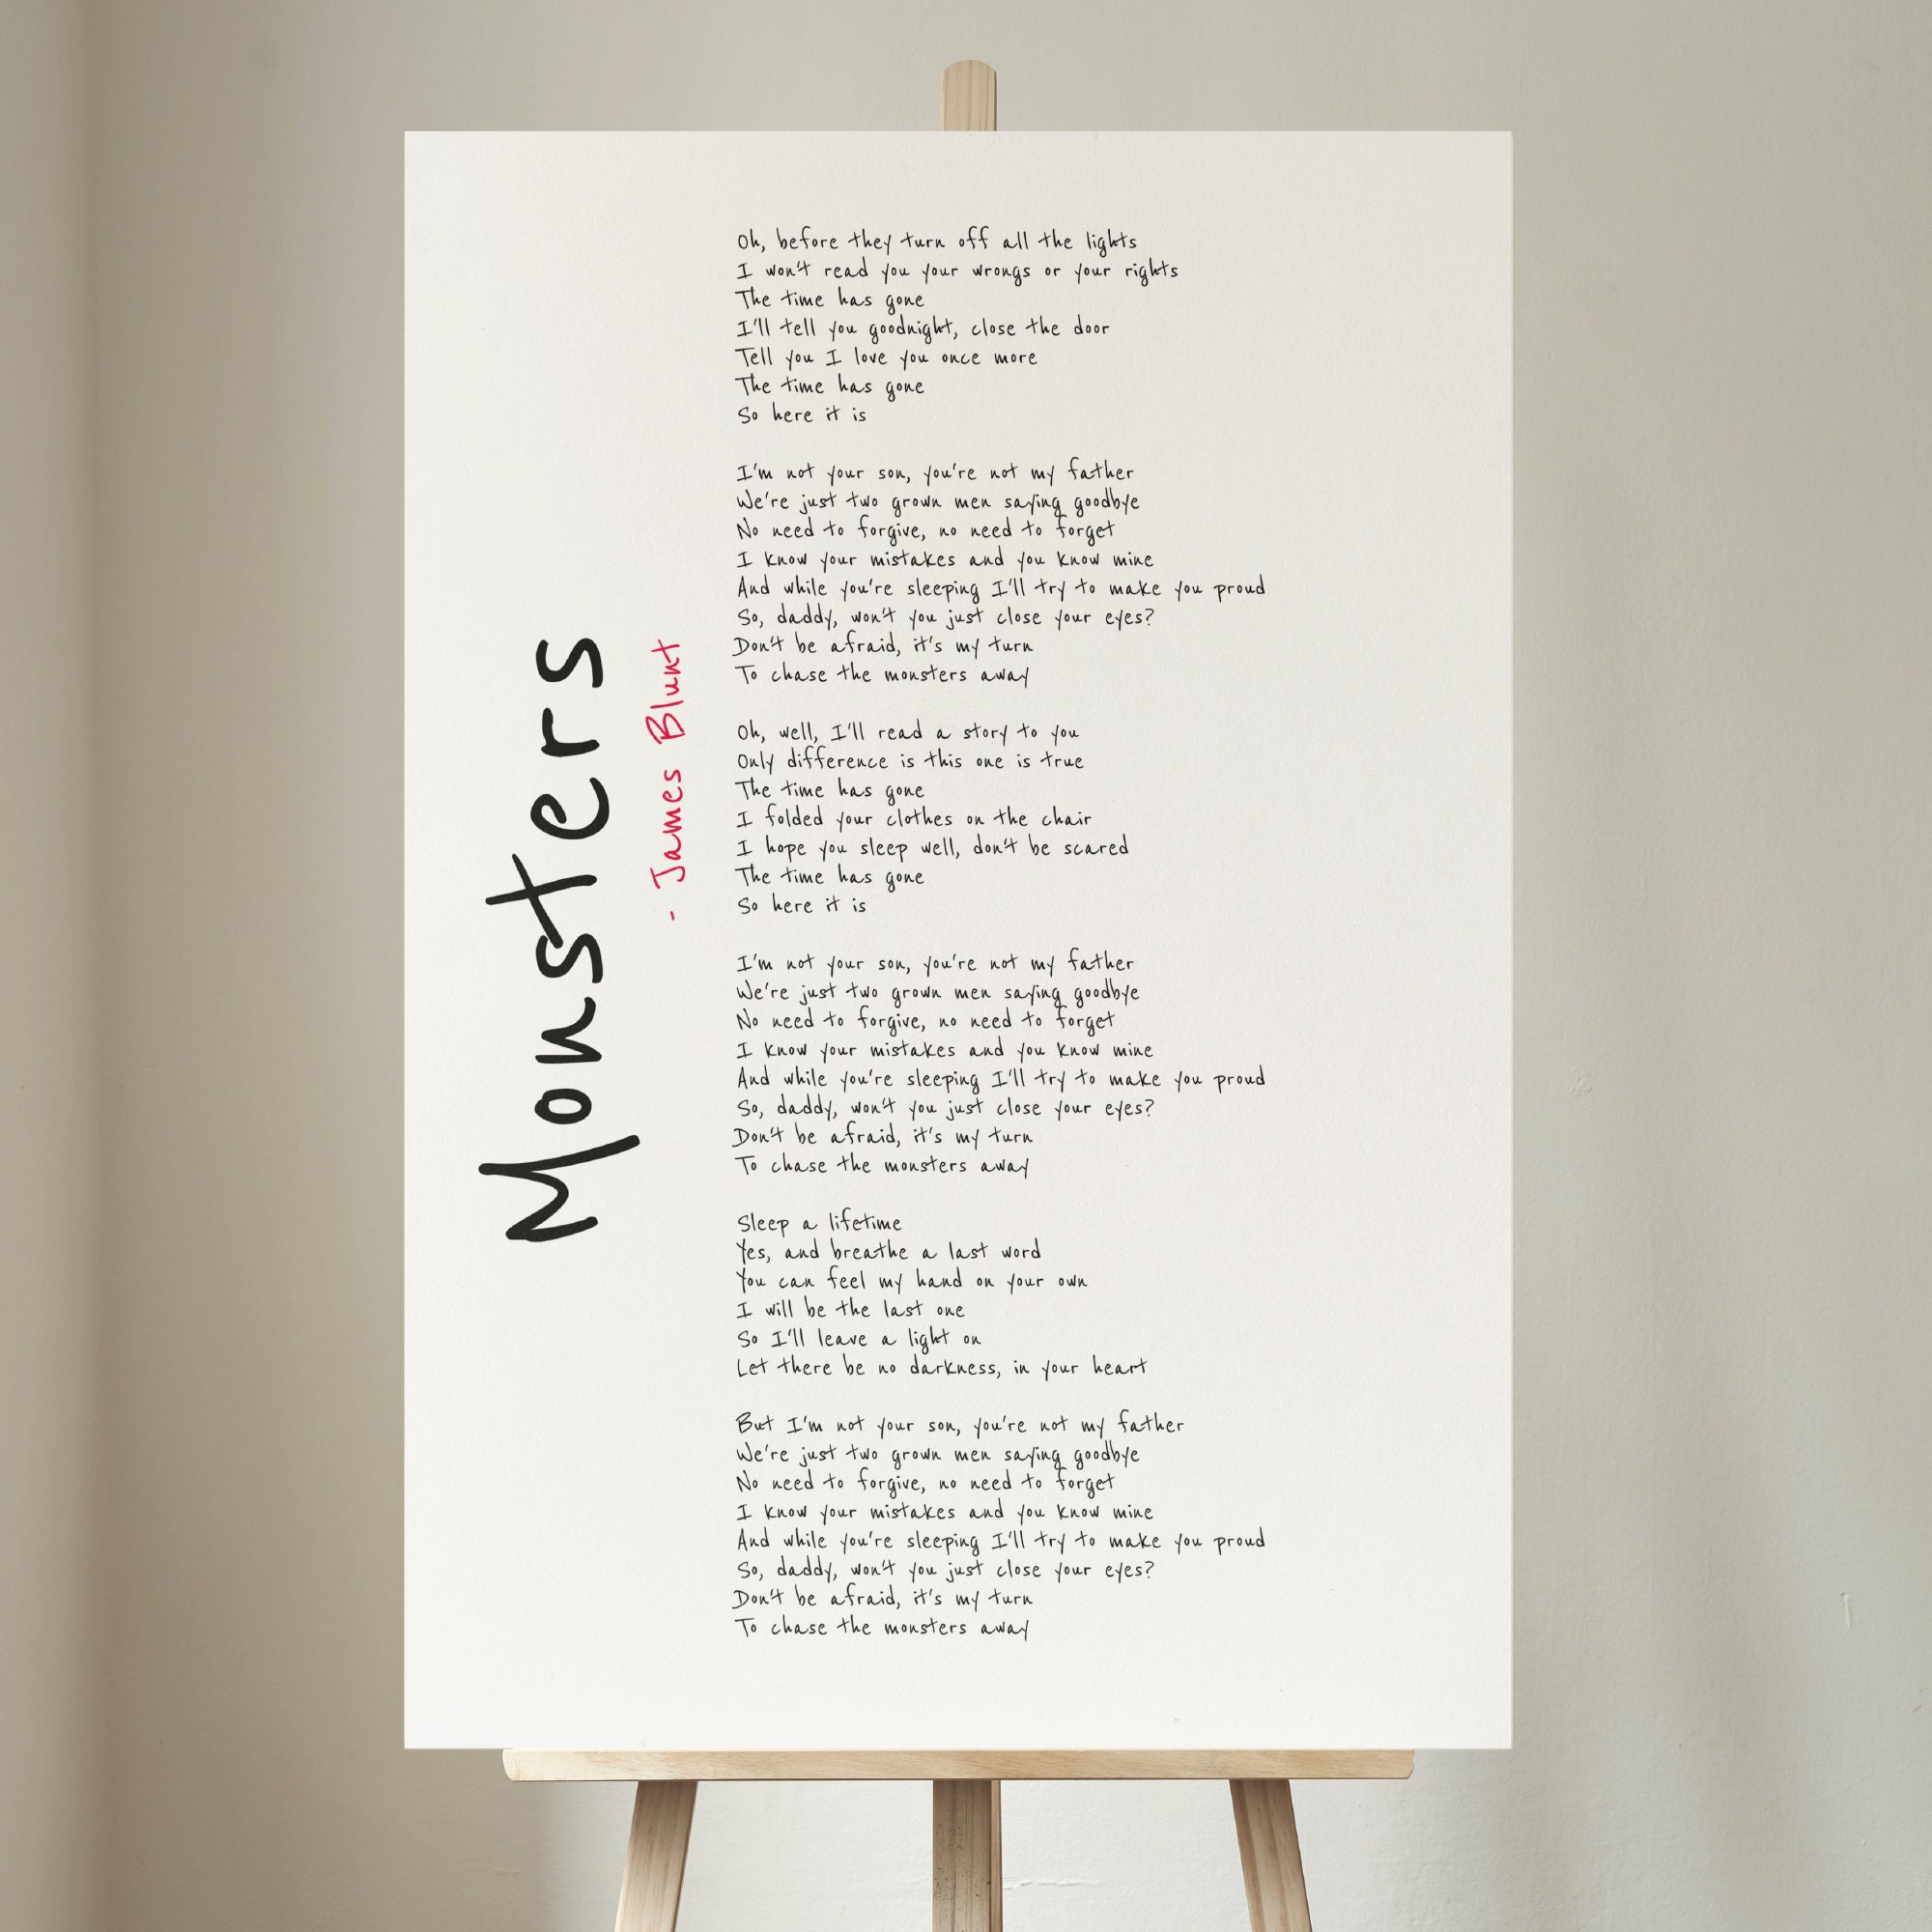 James Blunt – Monsters Lyrics